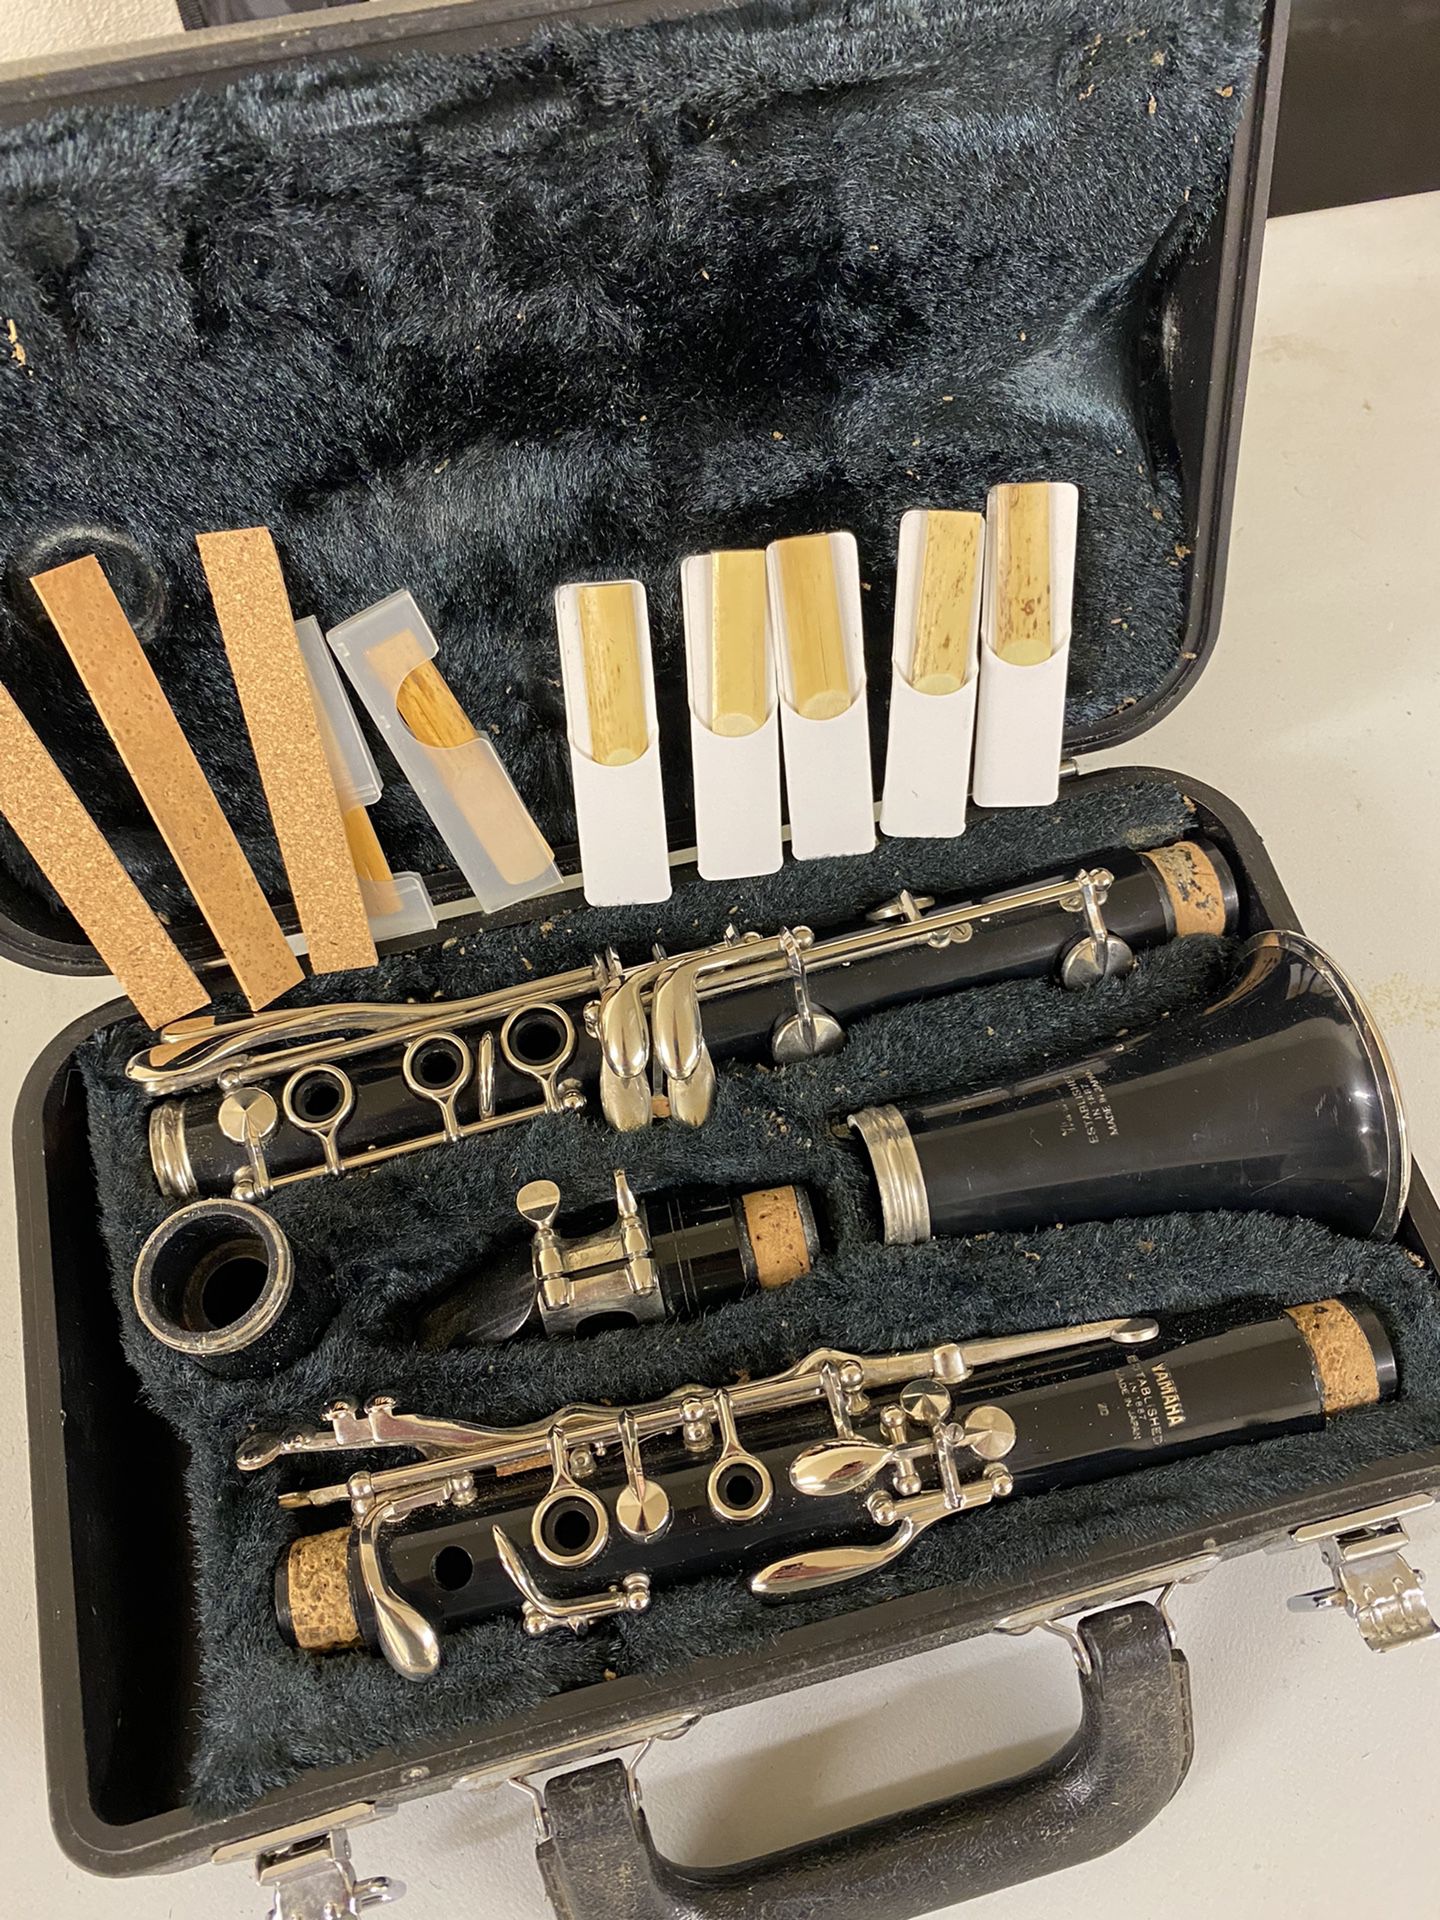 Waco Yamaha Clarinet With New Reeds $400 Firm